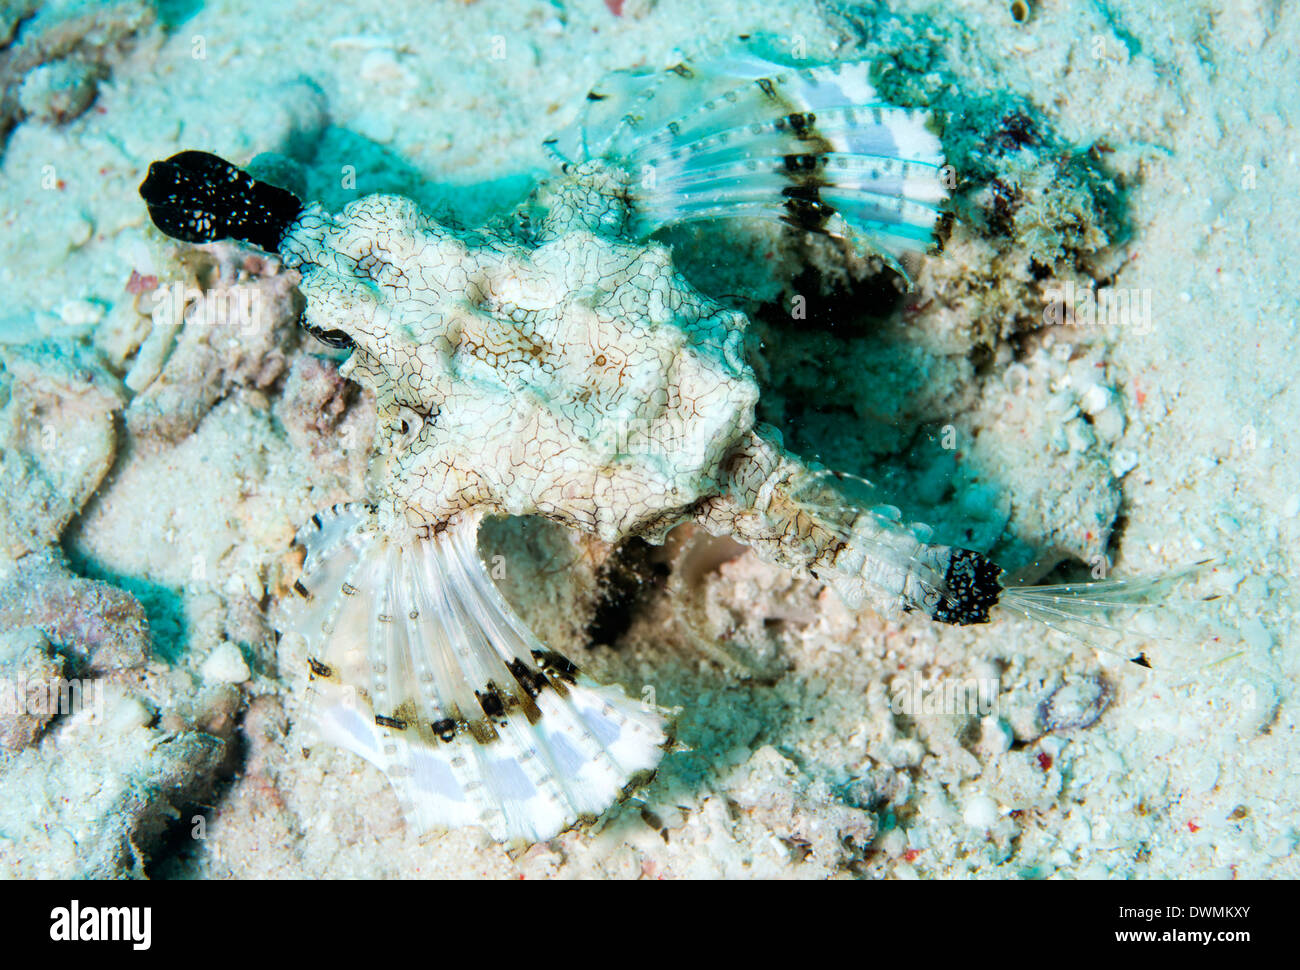 Short dragonfish (sea moth) (Dragon sea moth) (Europegasus draconis), Celebes Sea, Sabah, Malaysia, Southeast Asia, Asia Stock Photo